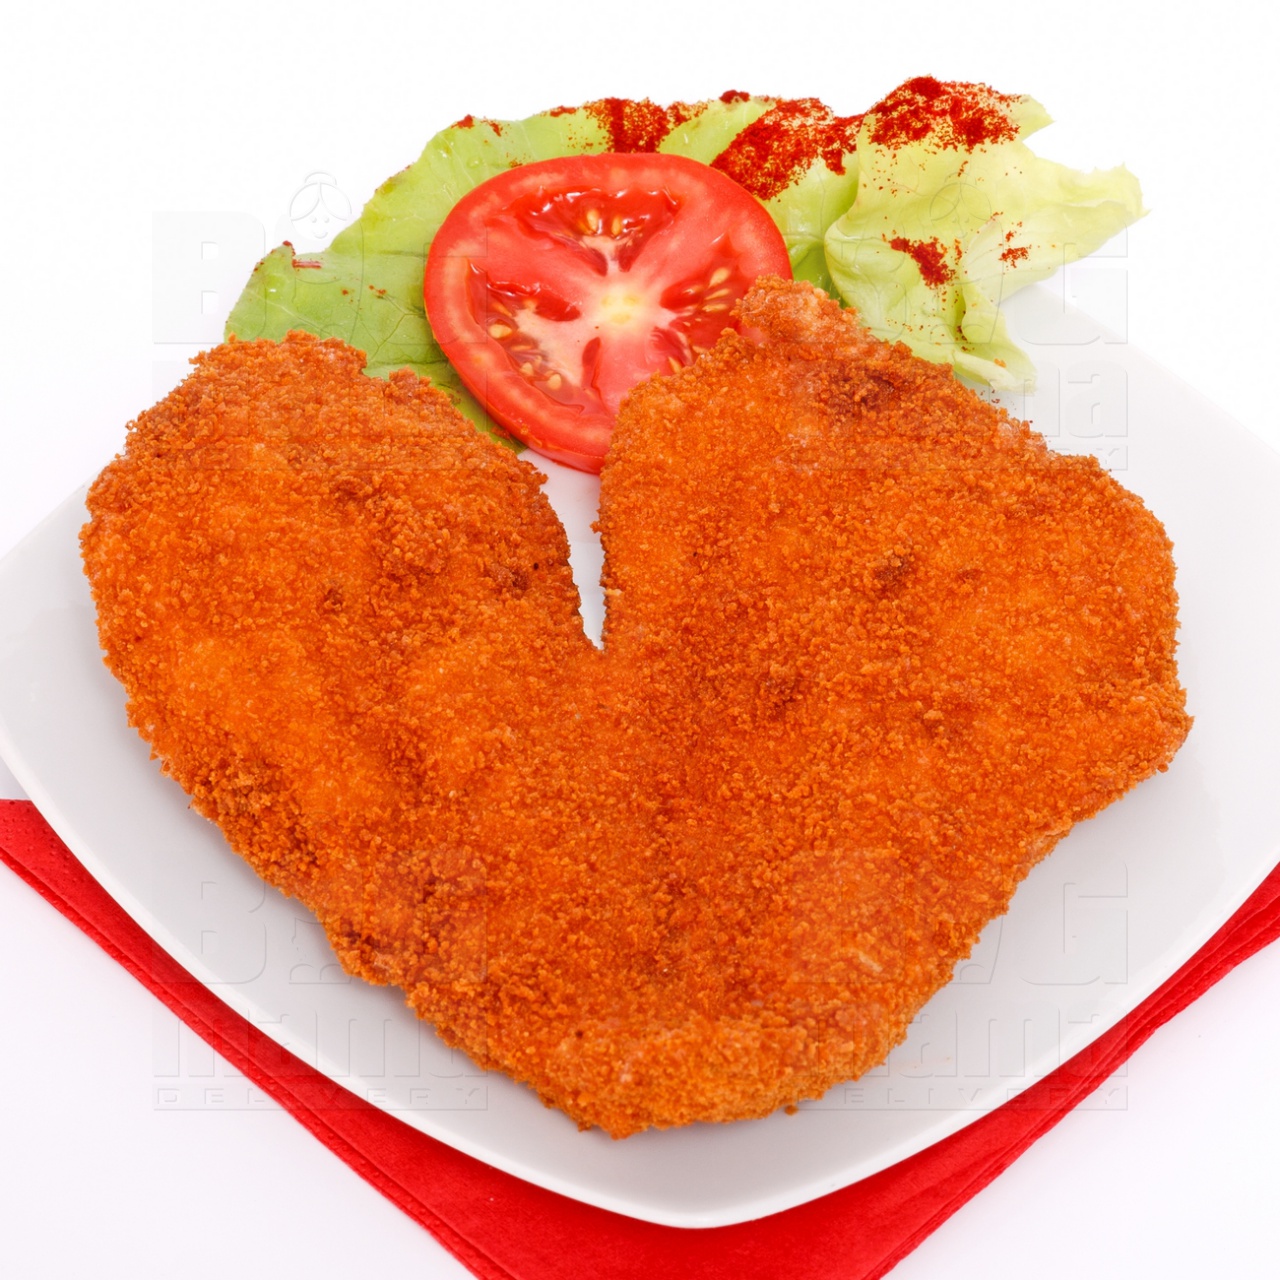 Product #197 image - Chicken breast schnitzel, half portion